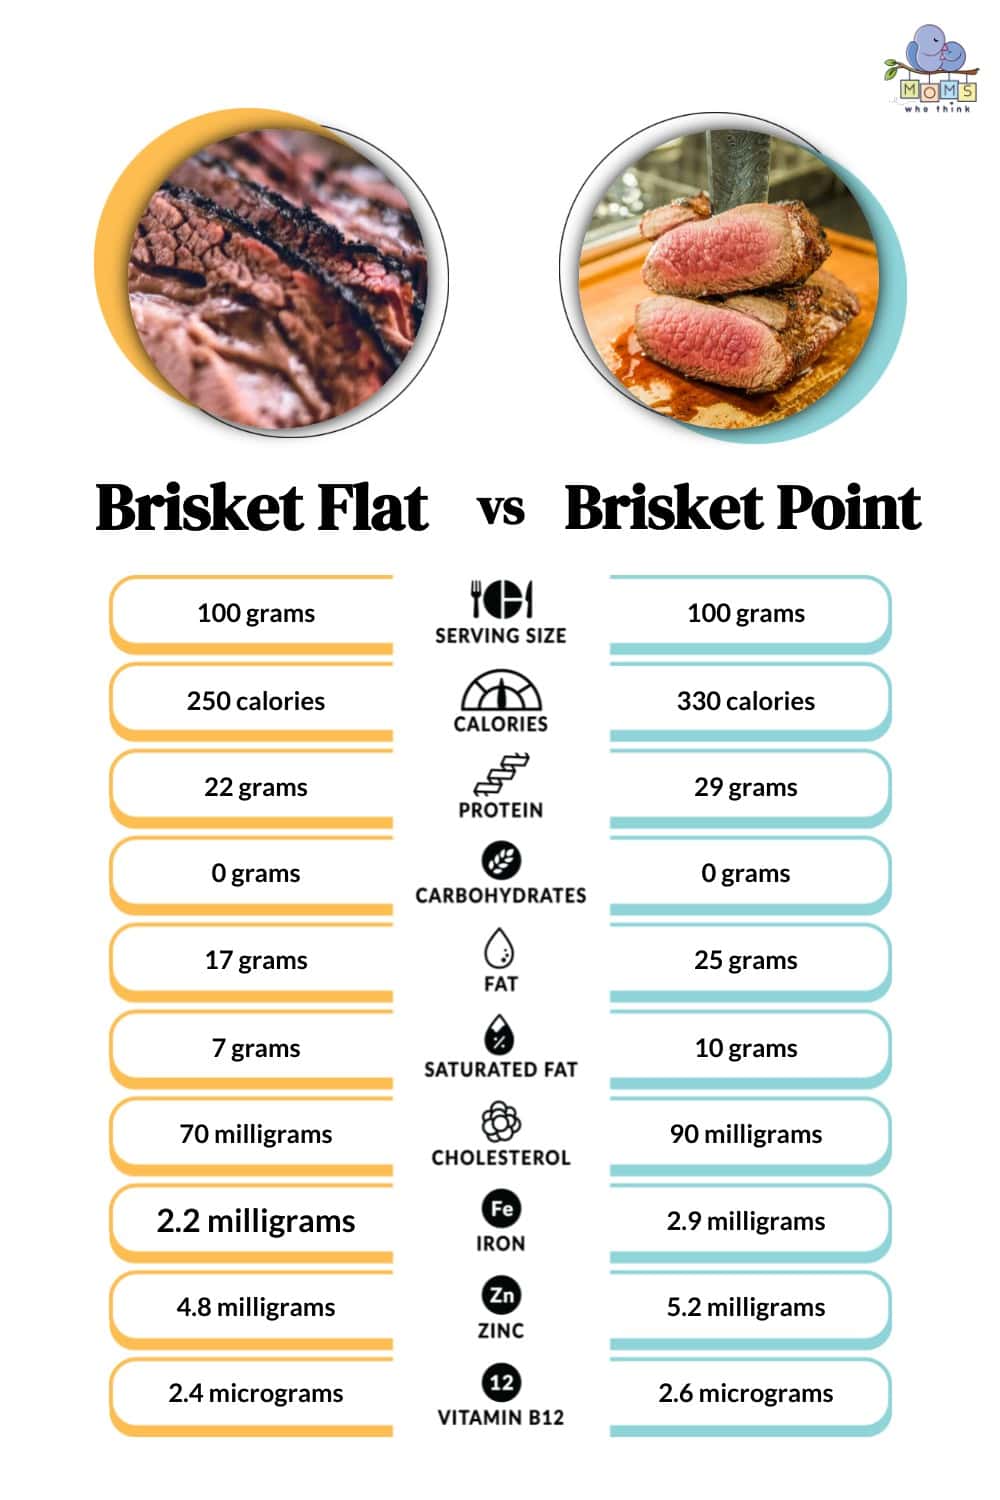 Brisket Flat vs Brisket Point Nutritional Facts